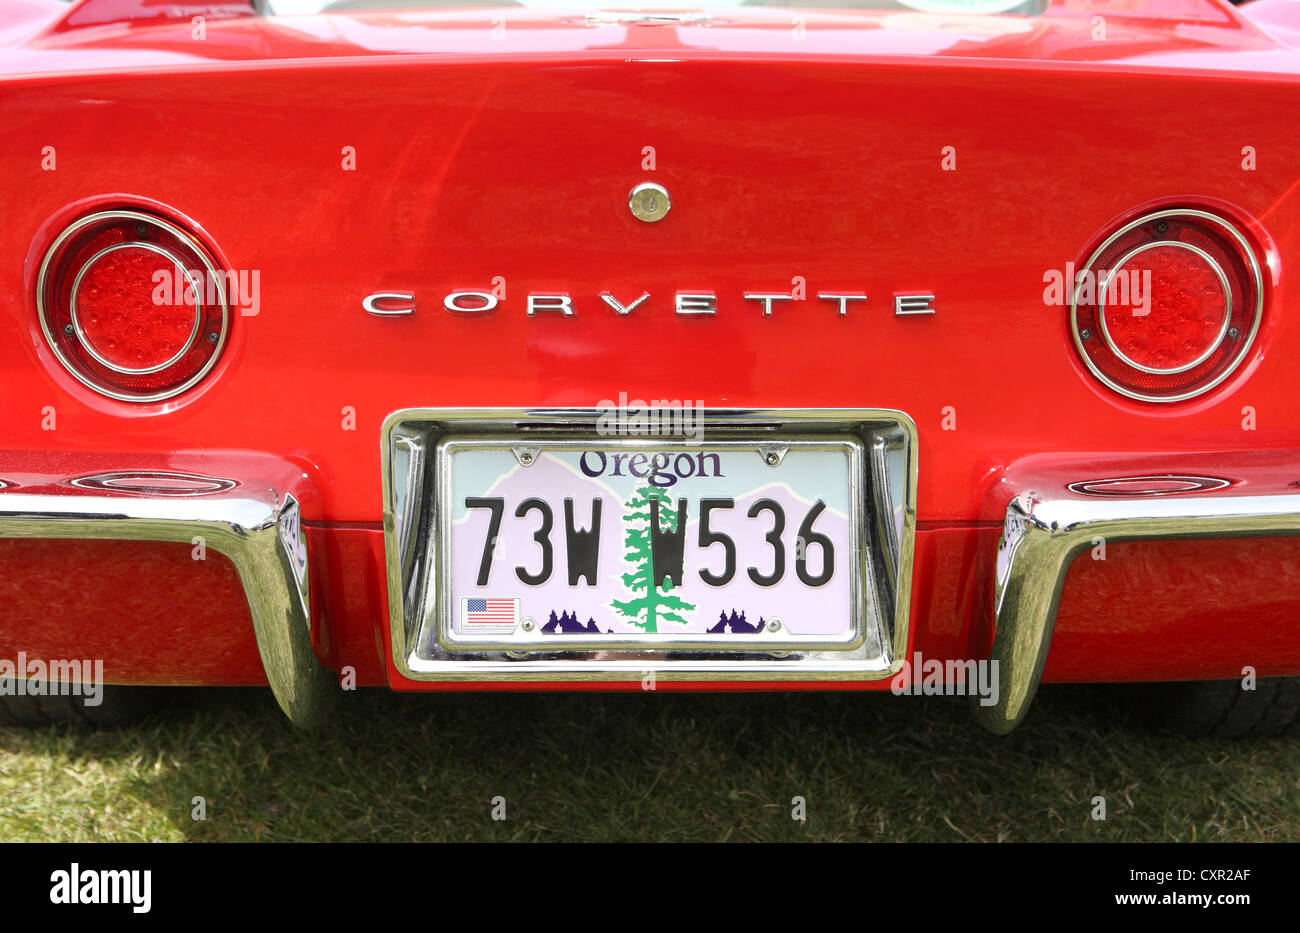 Red Corvette Stingray Foto Stock